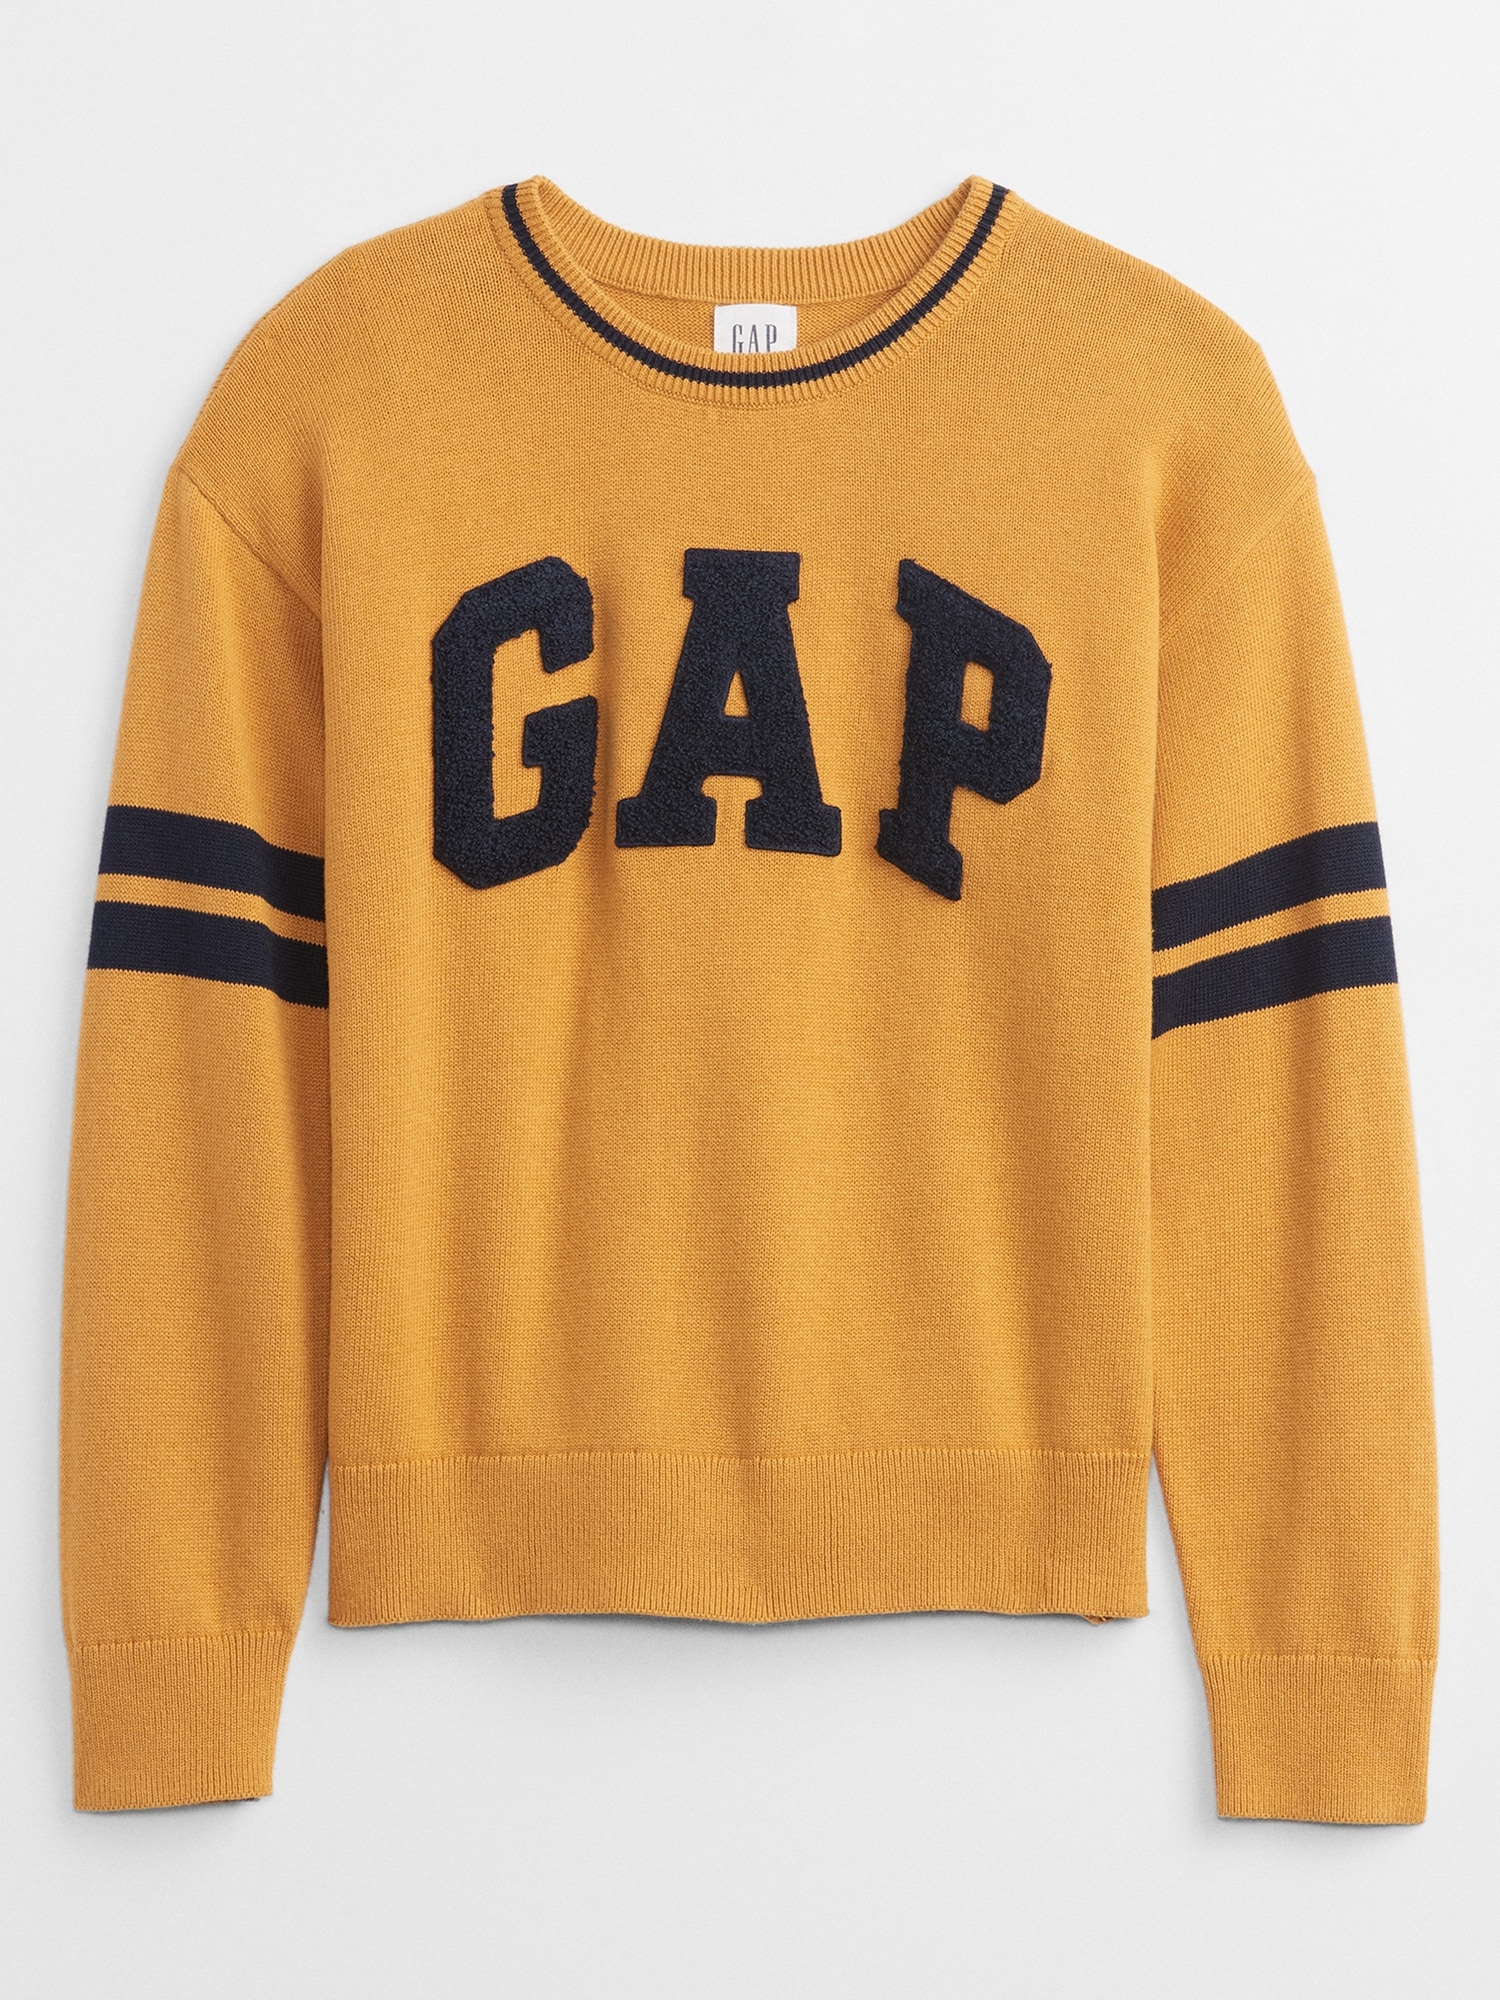 Kids Gap Logo Sweater | Gap Factory